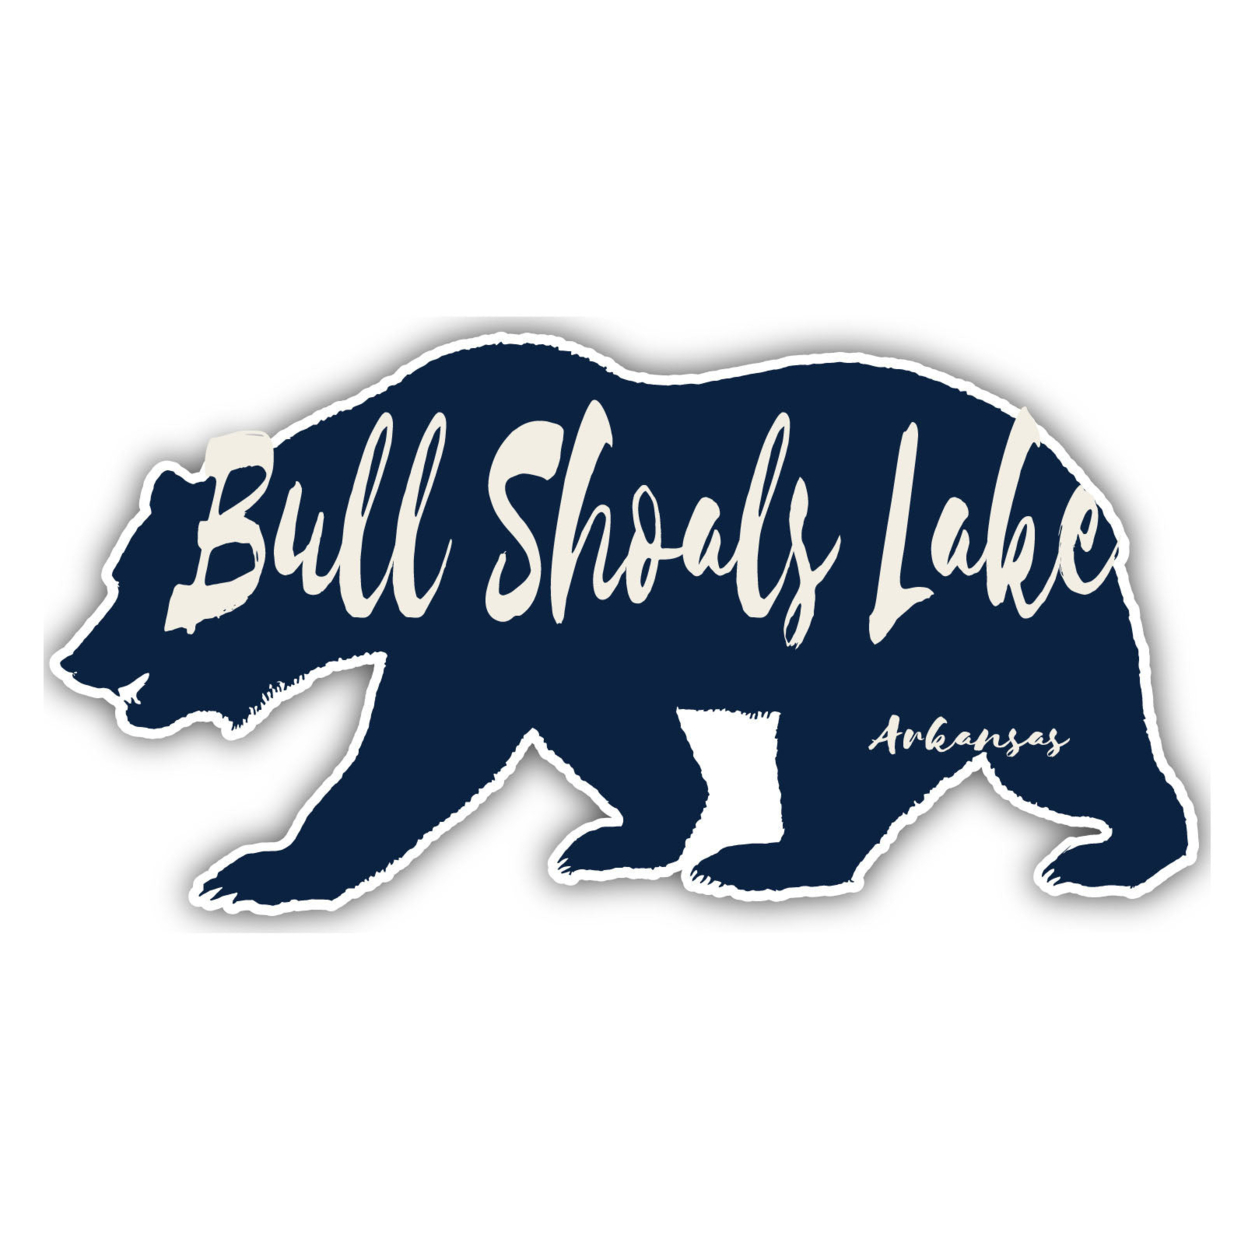 Bull Shoals Lake Arkansas Souvenir Decorative Stickers (Choose Theme And Size) - 4-Pack, 12-Inch, Adventures Awaits